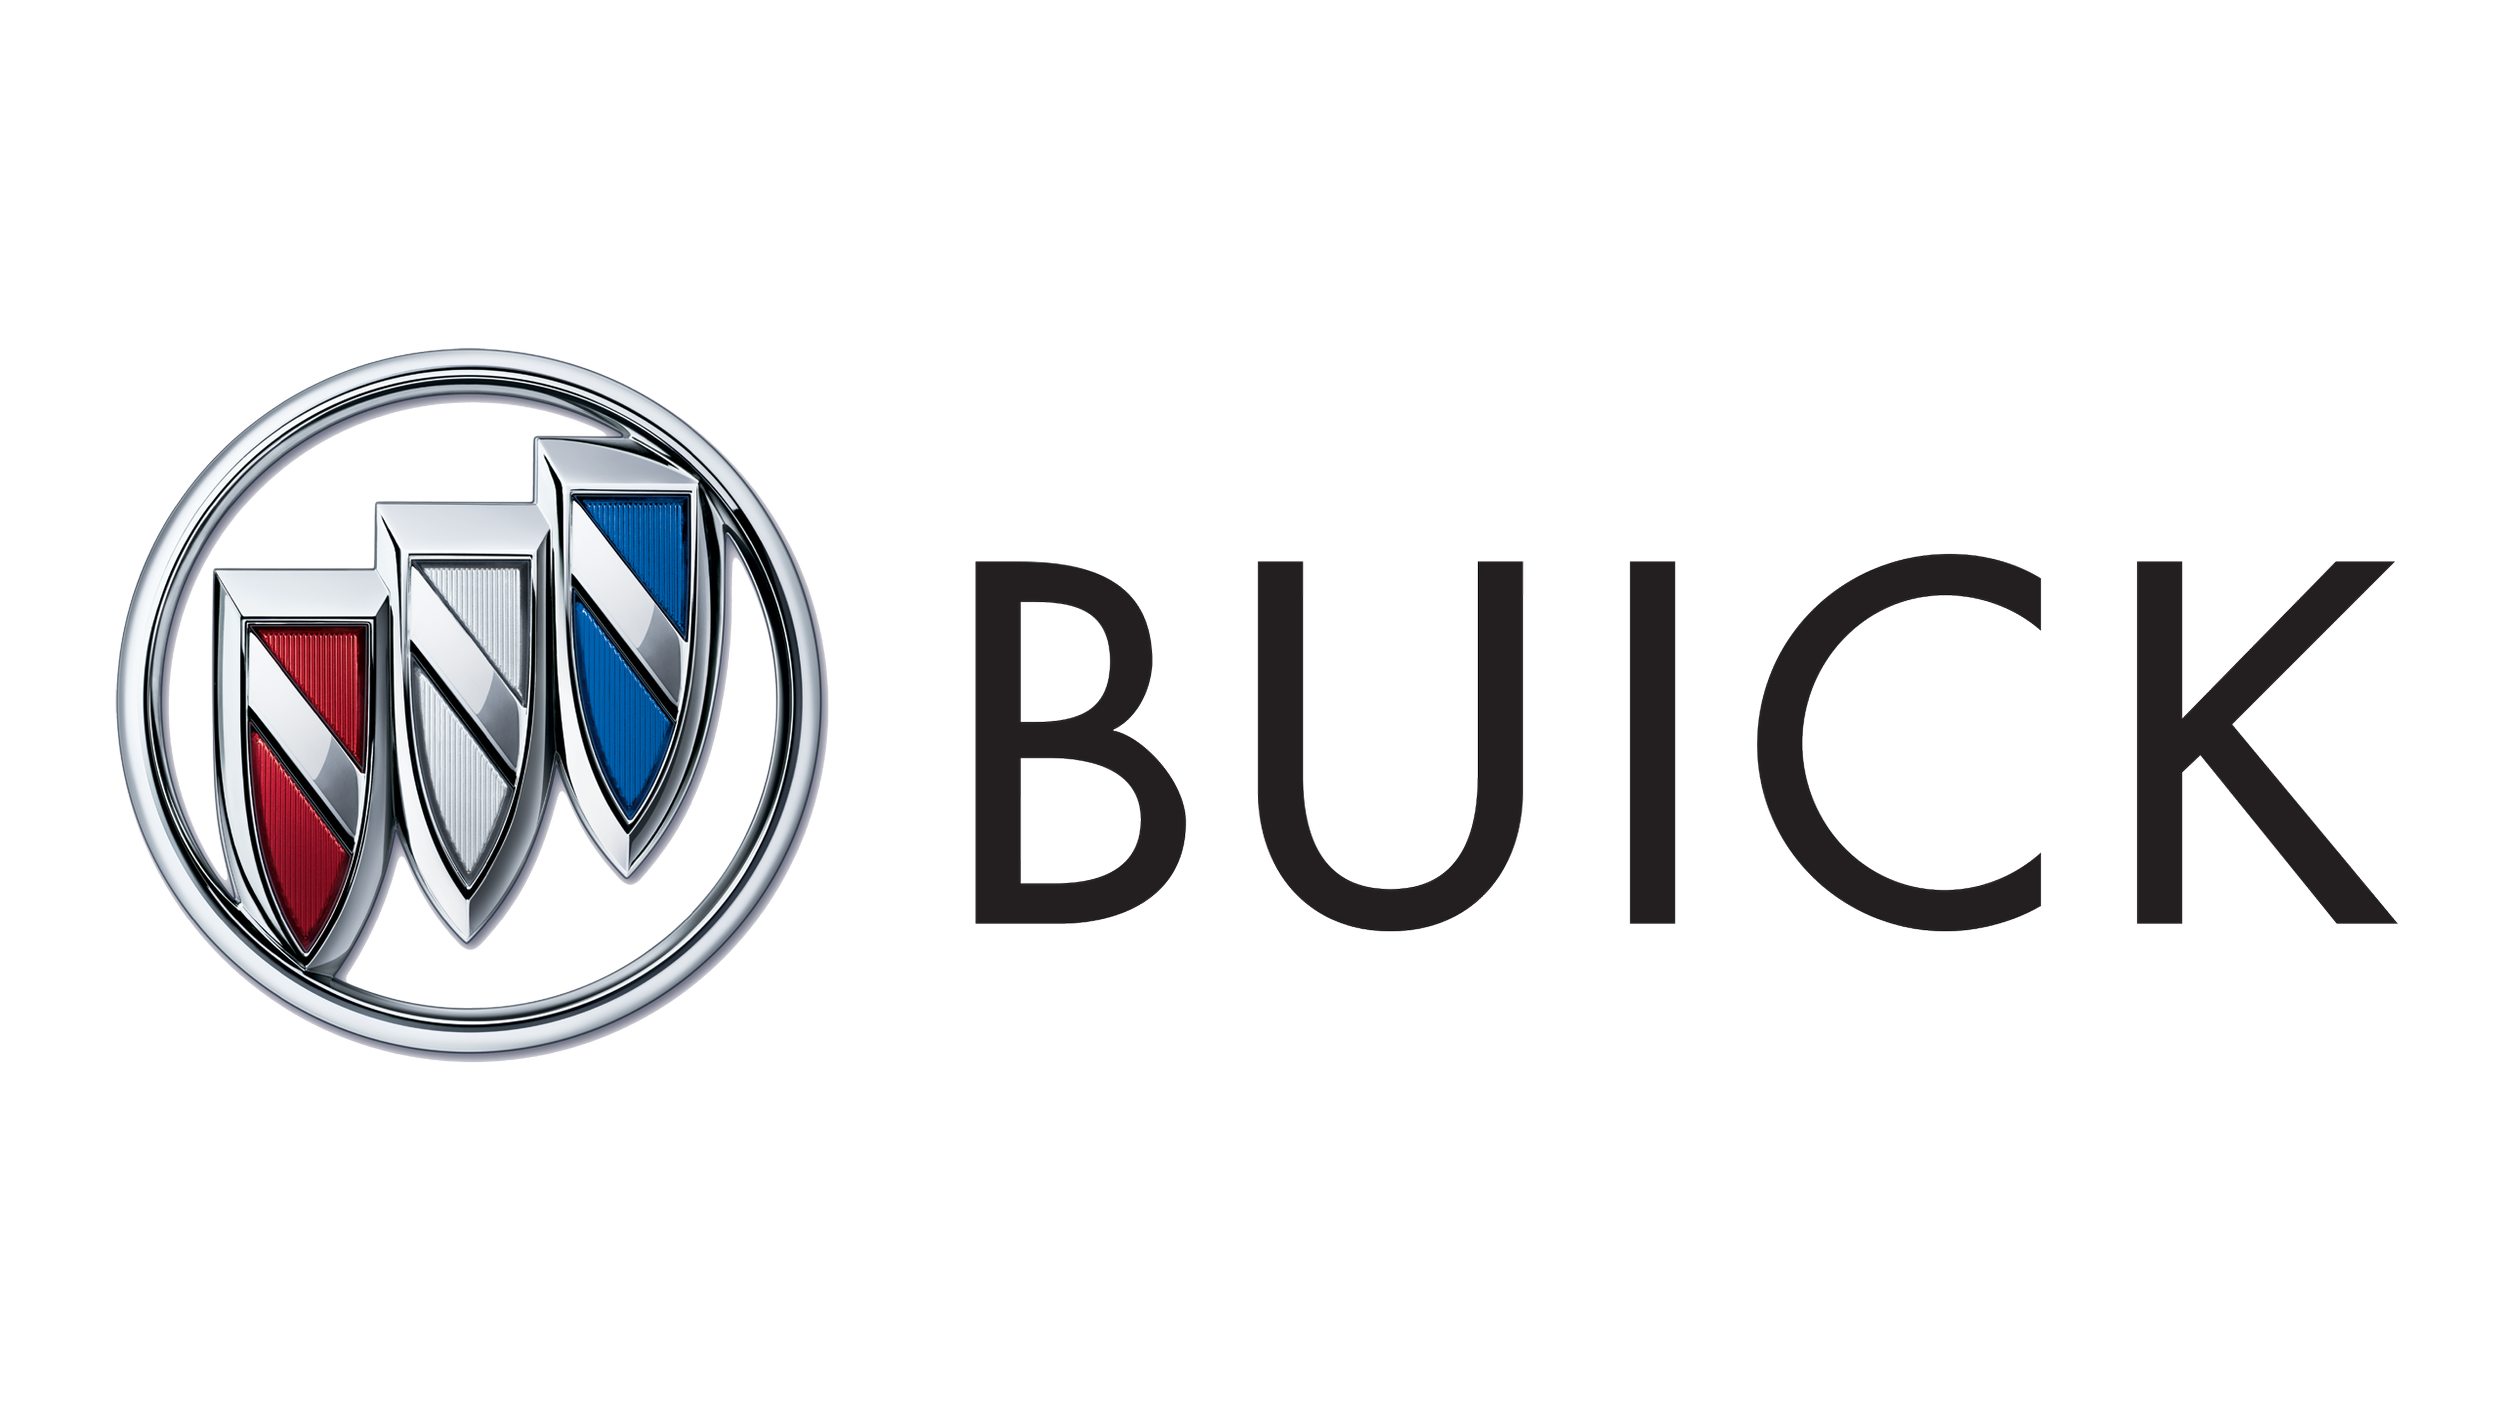 Buick-logo-2002-2560x1440.png